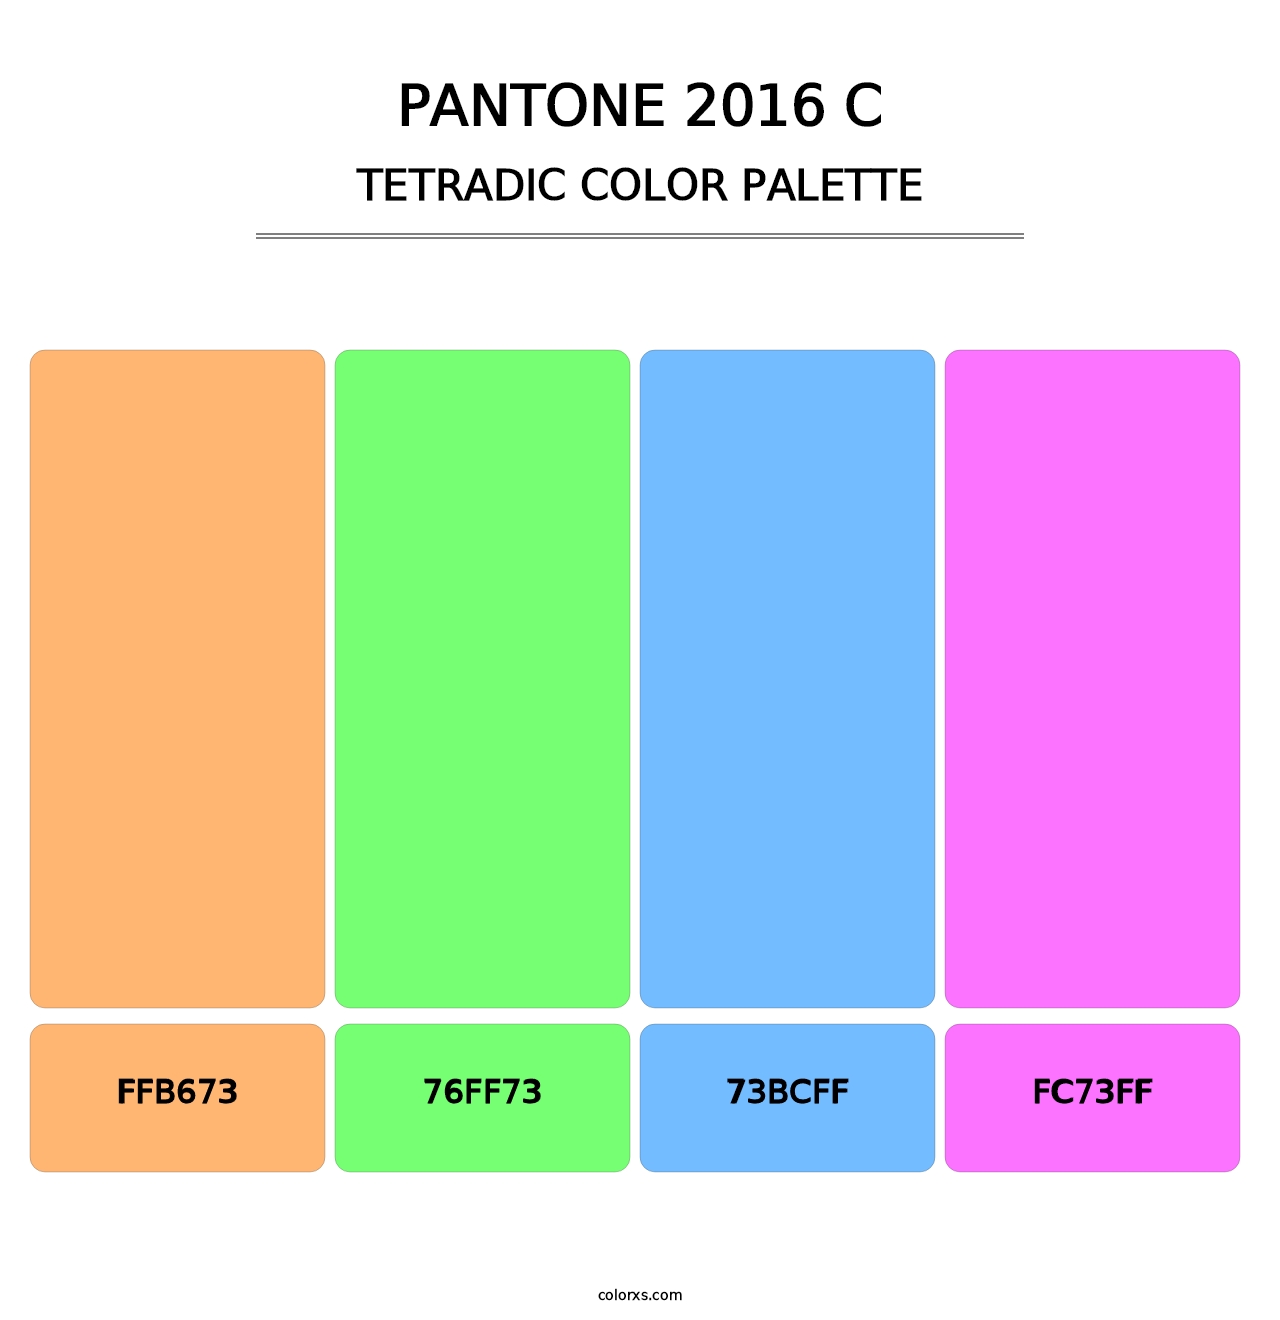 PANTONE 2016 C - Tetradic Color Palette